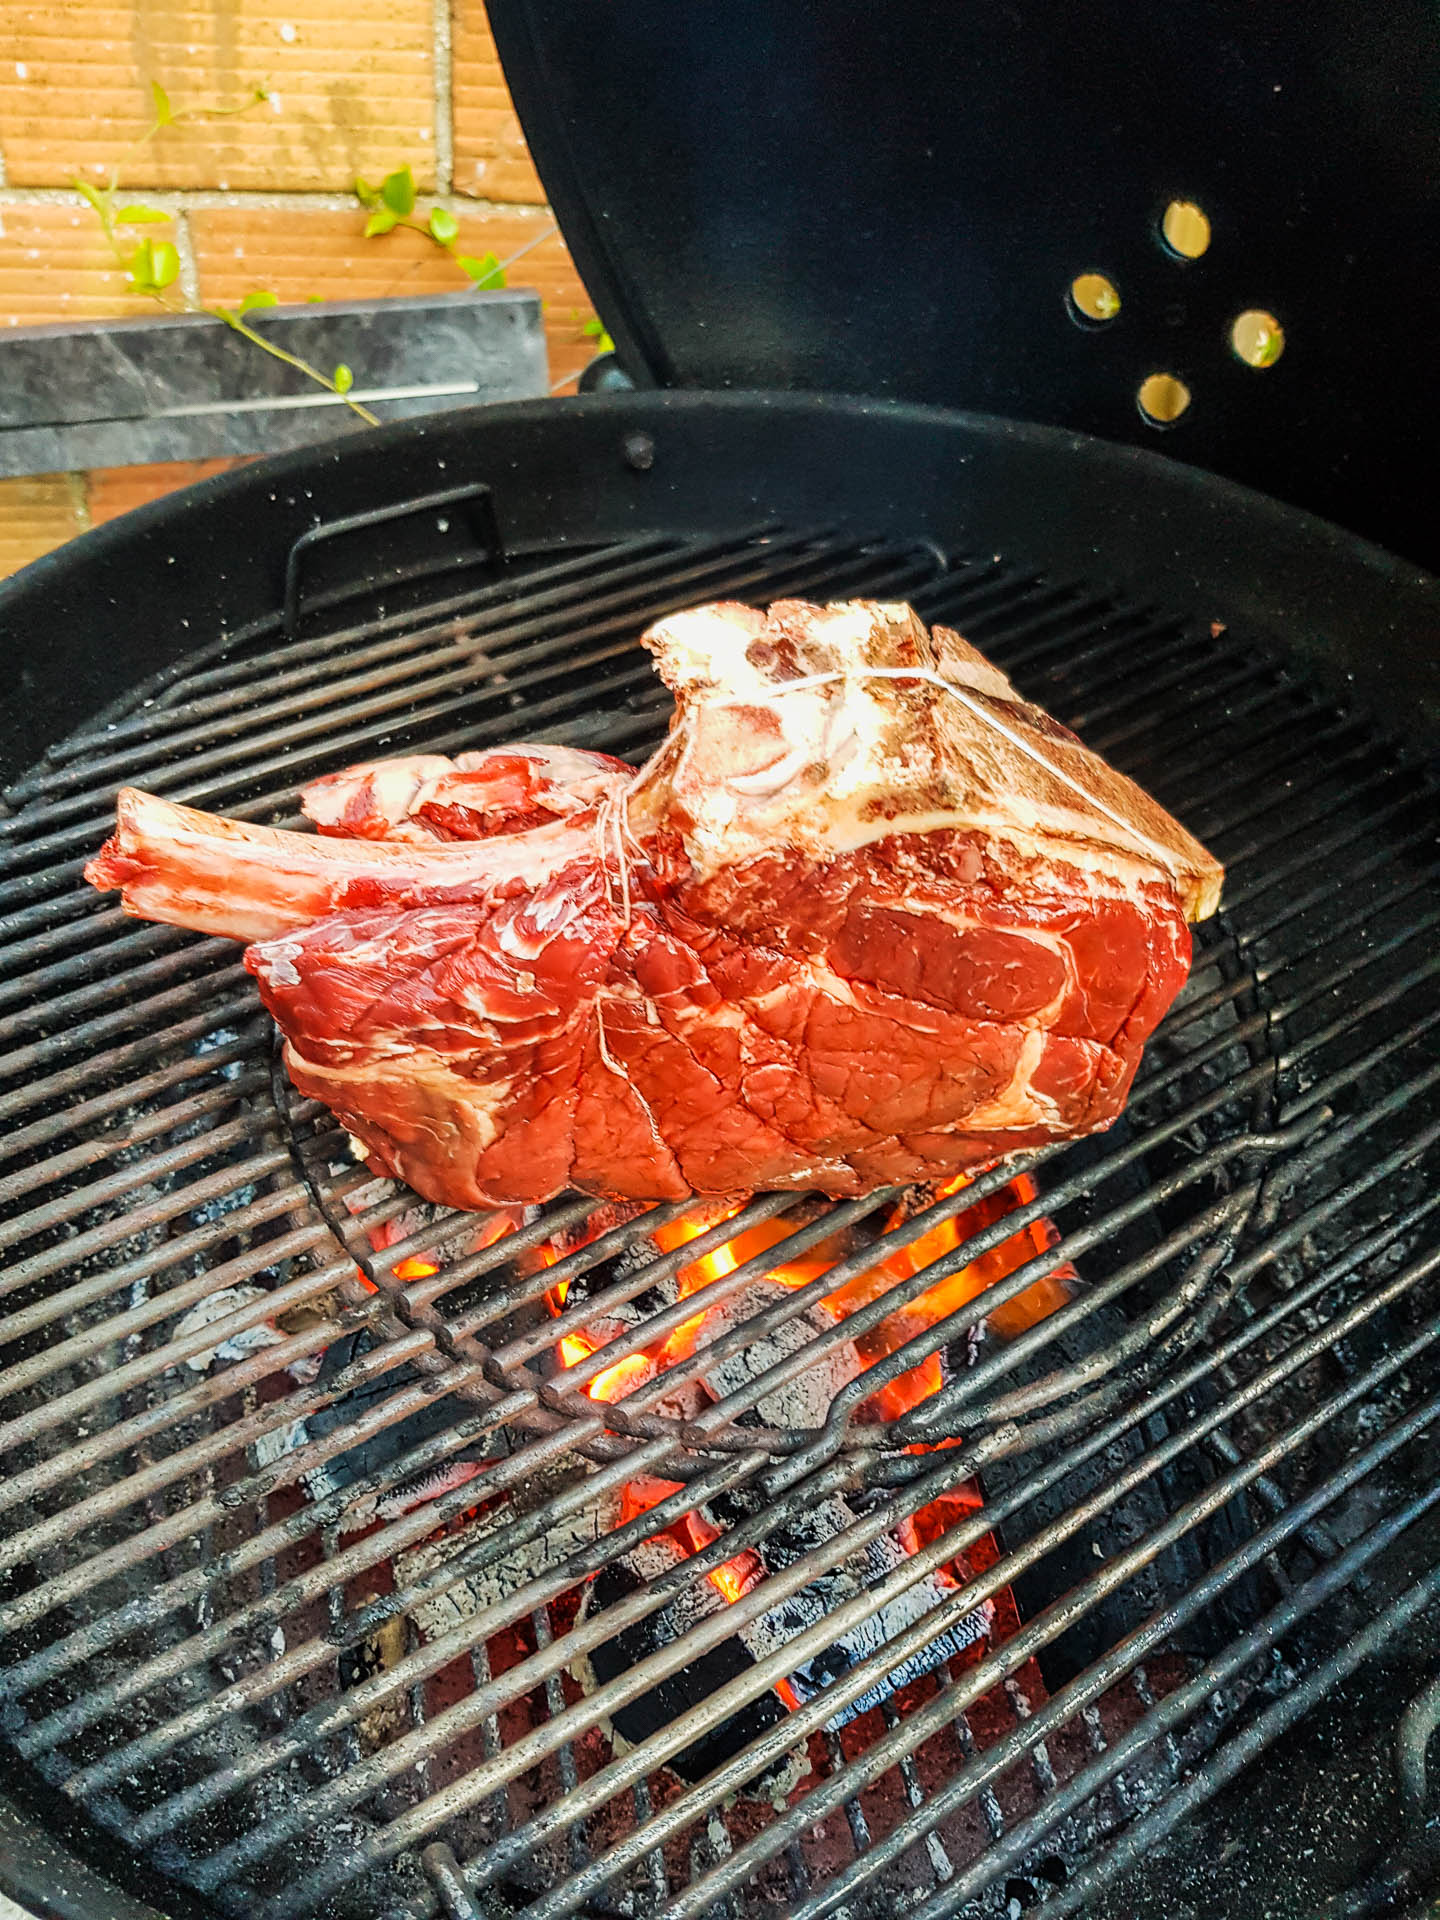 Fer à marquer la viande à barbecue selon sa cuisson : bleu